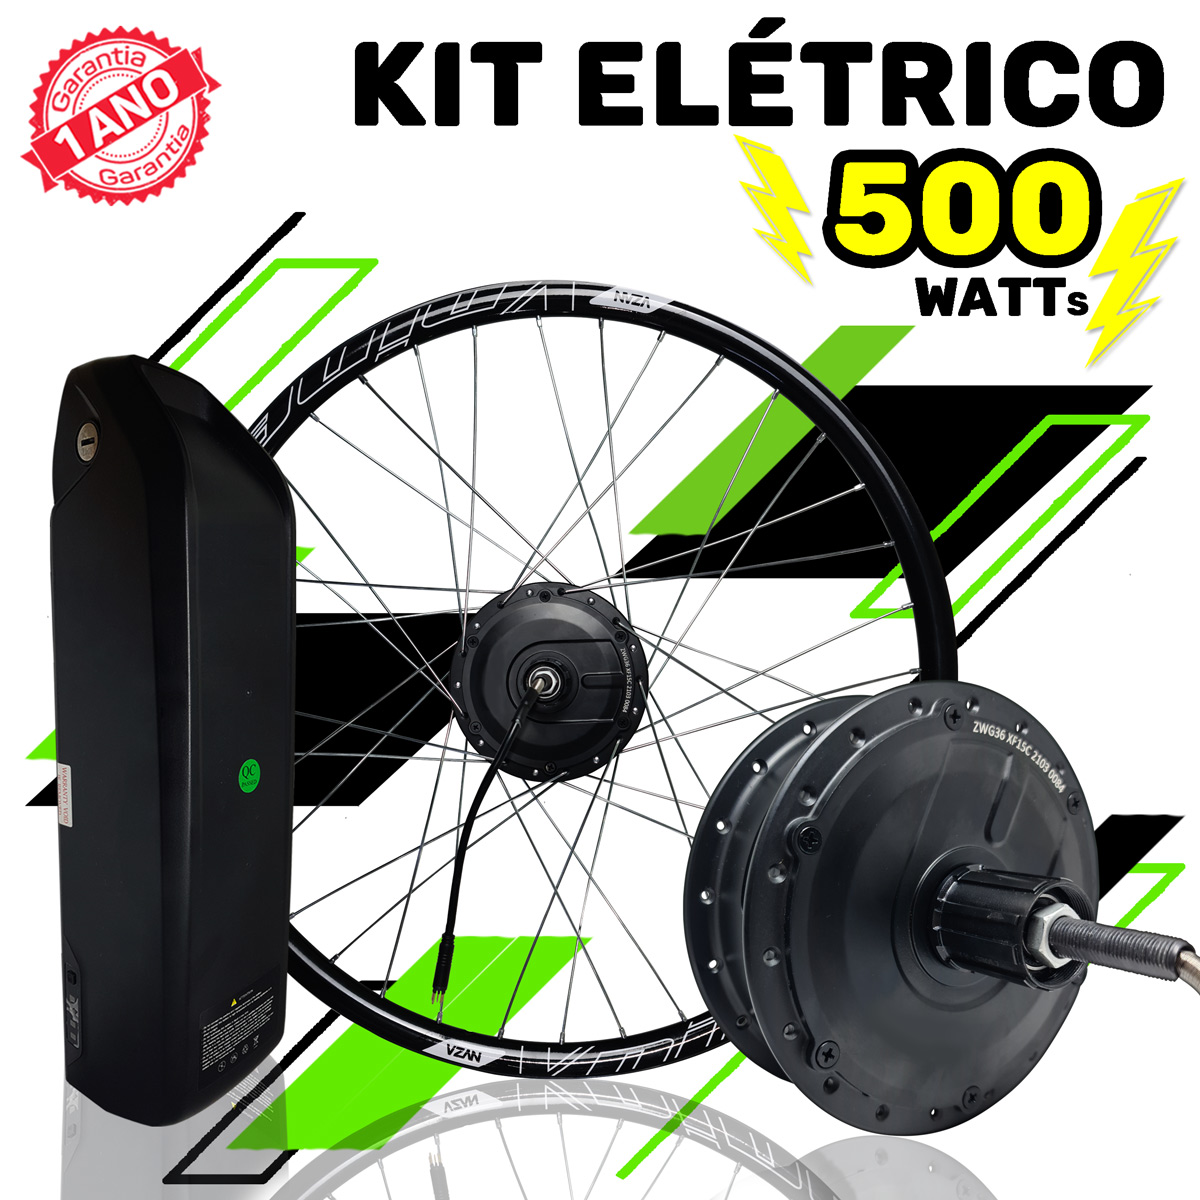 Kit Elétrico para Bicicleta - TecBike - Bateria Preta - 500 Watts 36V - Aro 27,5